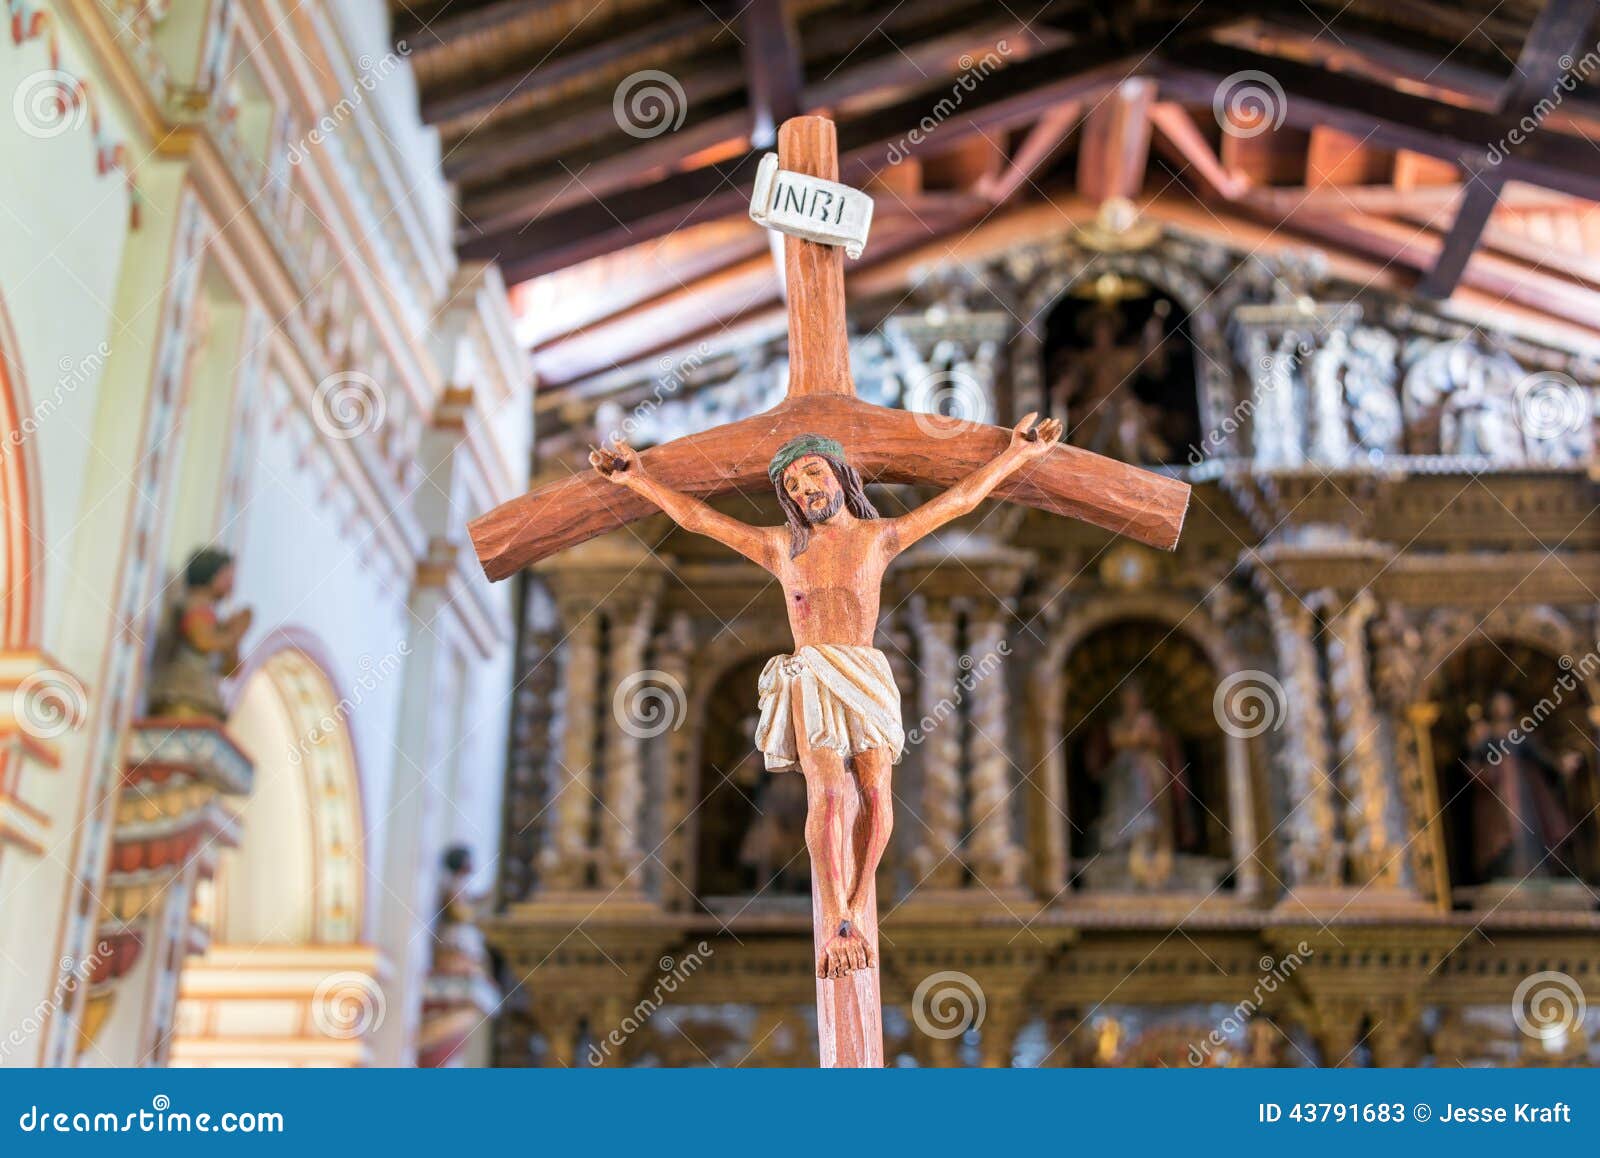 jesus on the cross in san ramon, bolivia